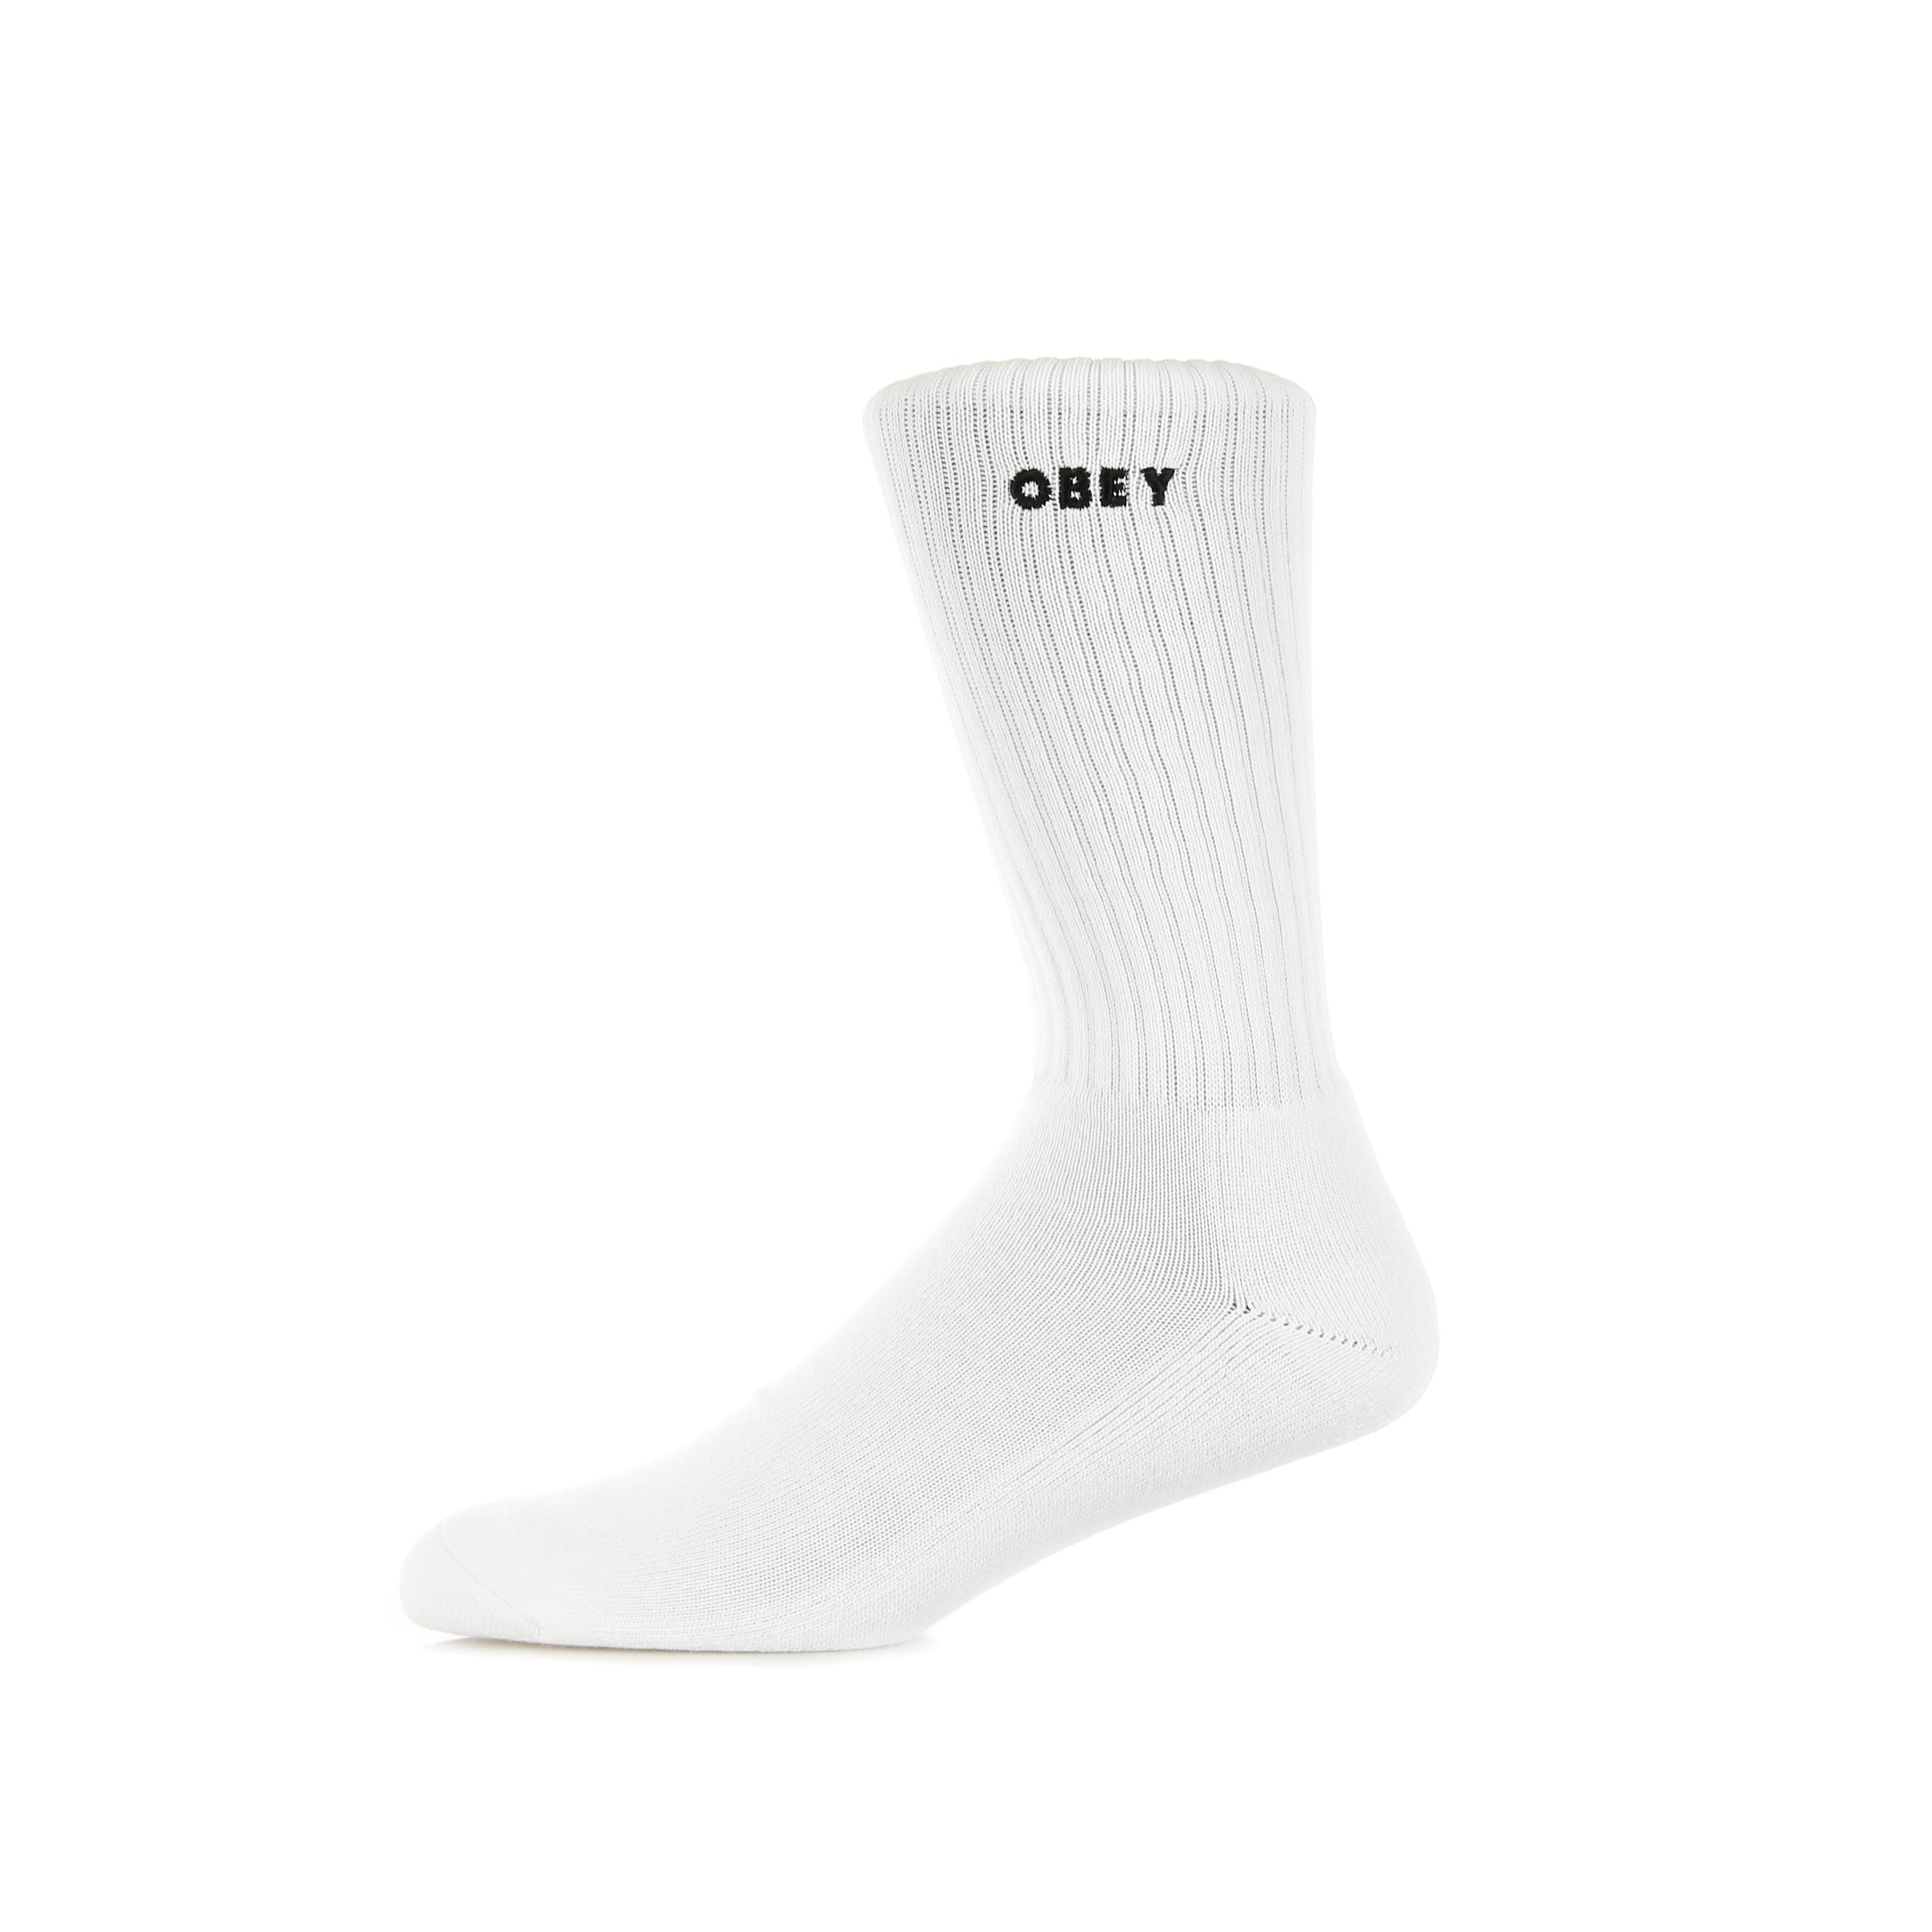 Obey, Calza Media Uomo Bold Socks, White